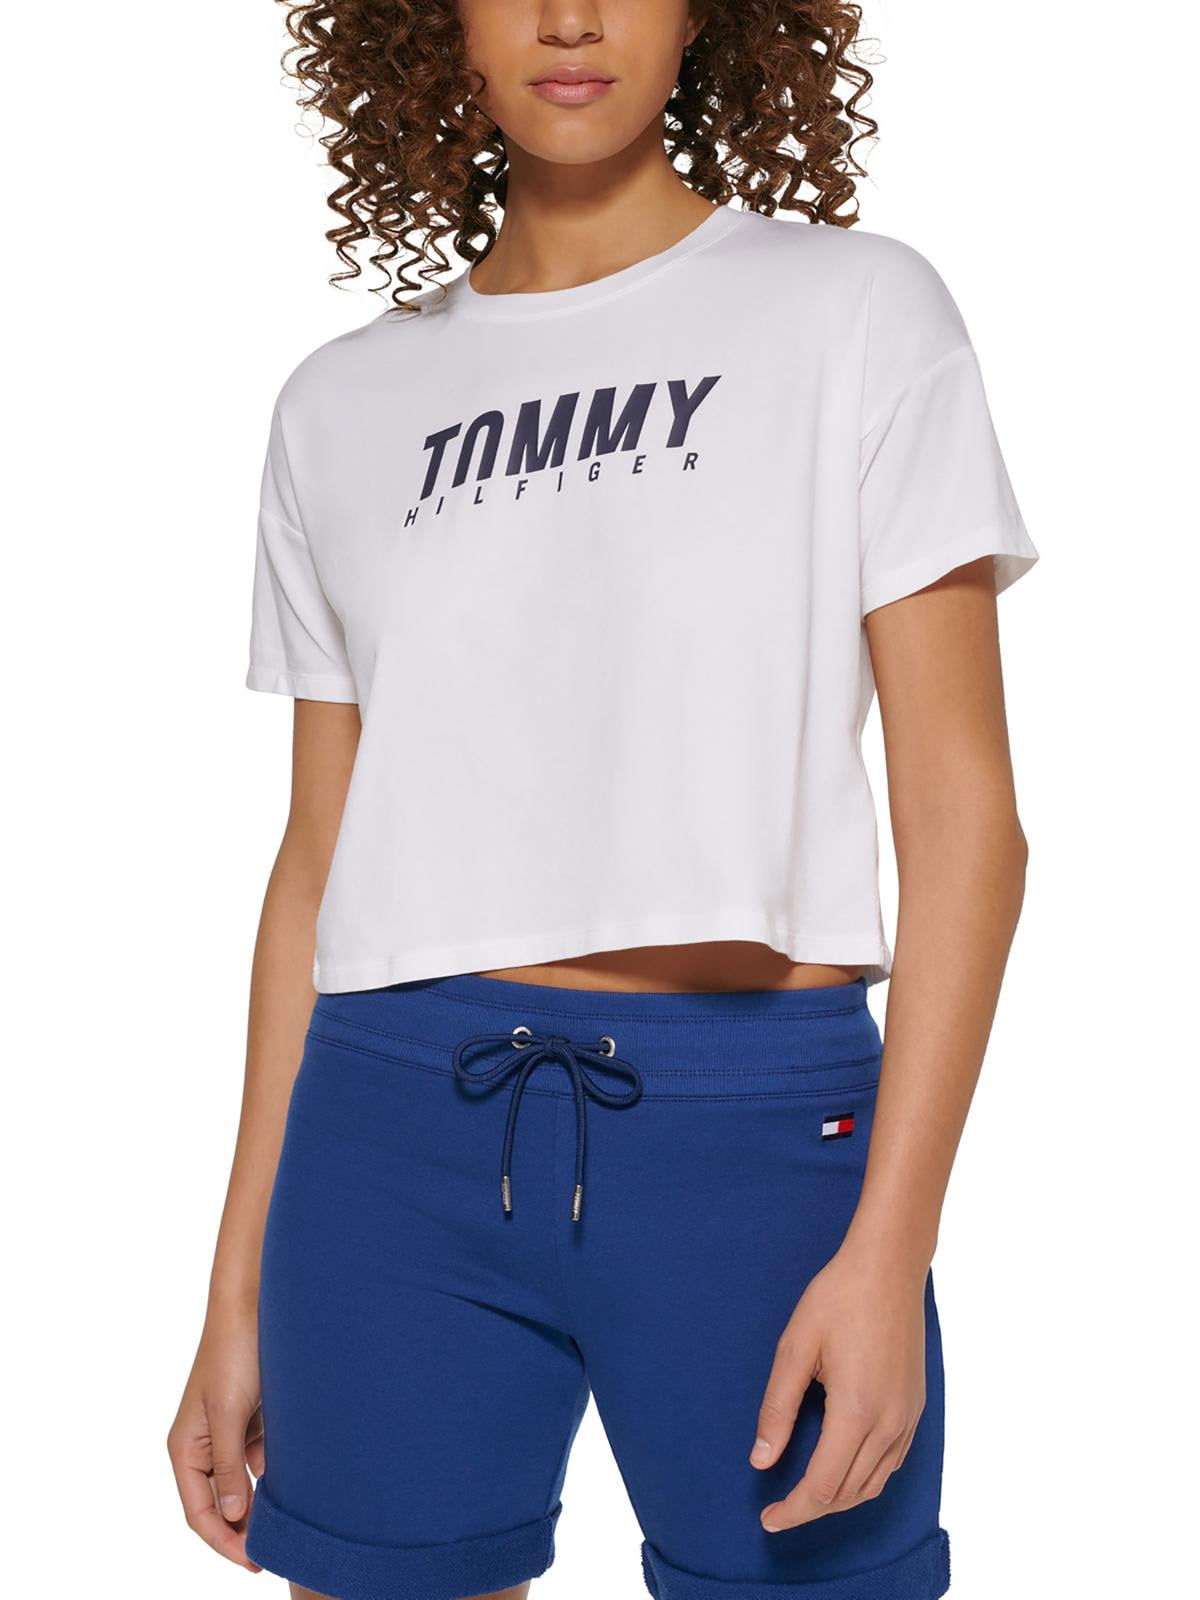 Womens Hilfiger Cropped Logo T-Shirt Tommy Sport